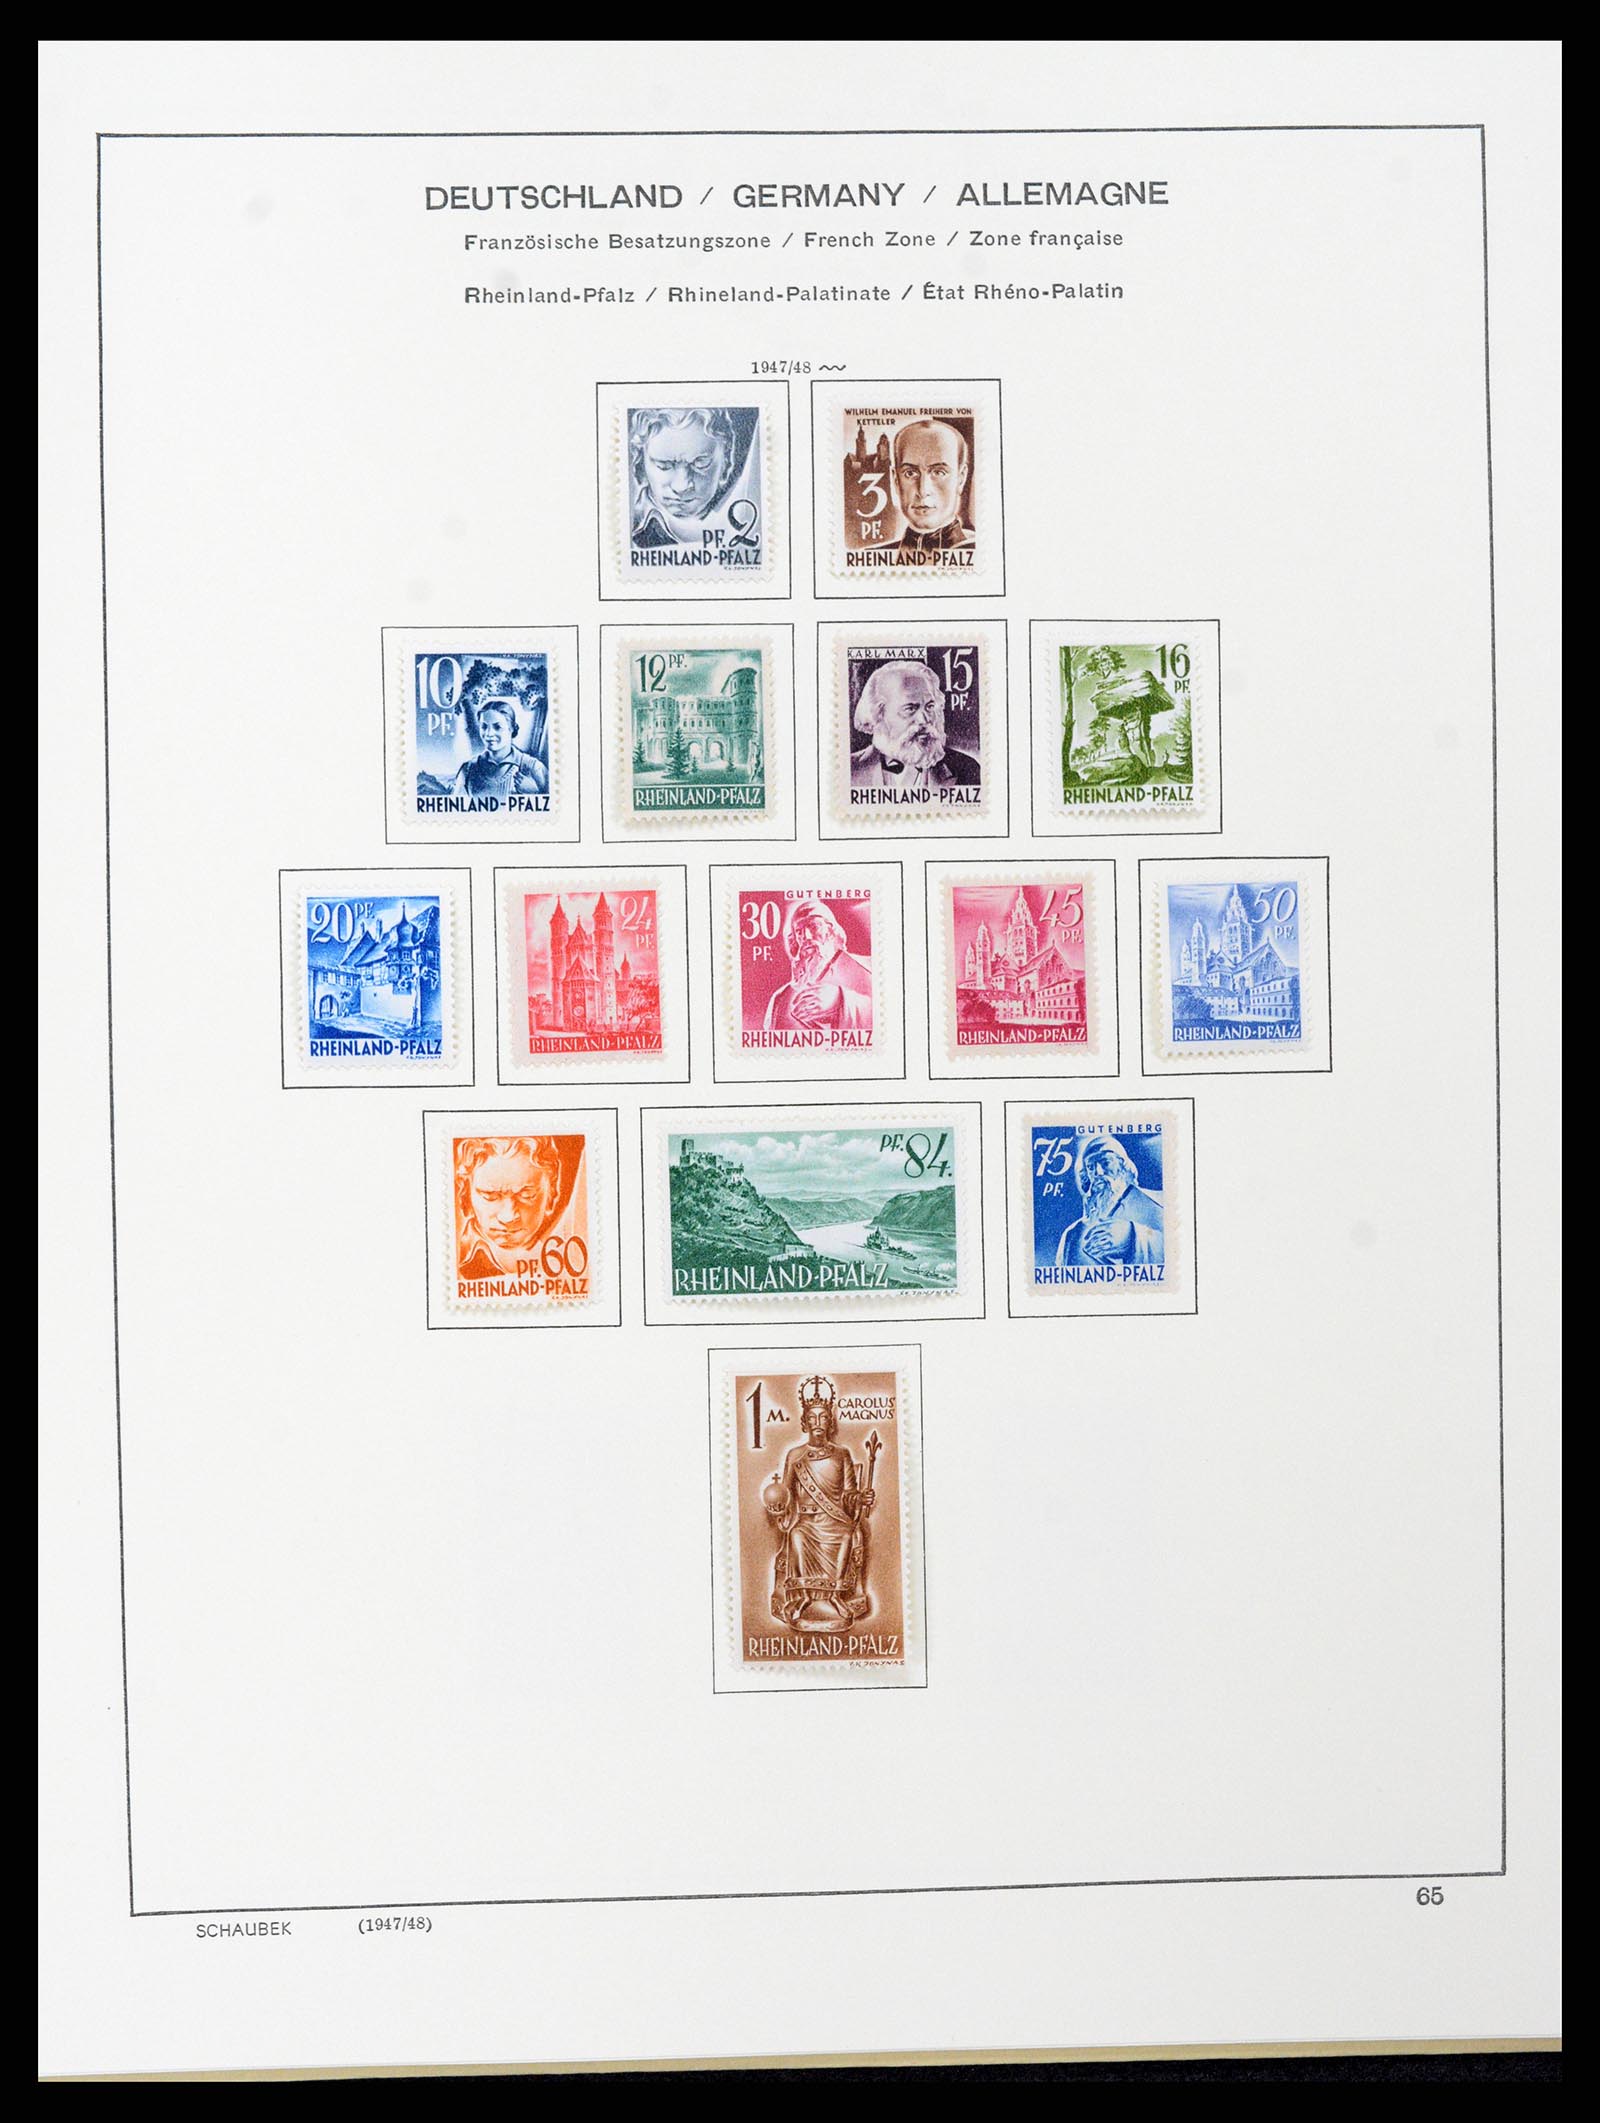 37645 064 - Stamp collection 37645 German Zones 1945-1949.